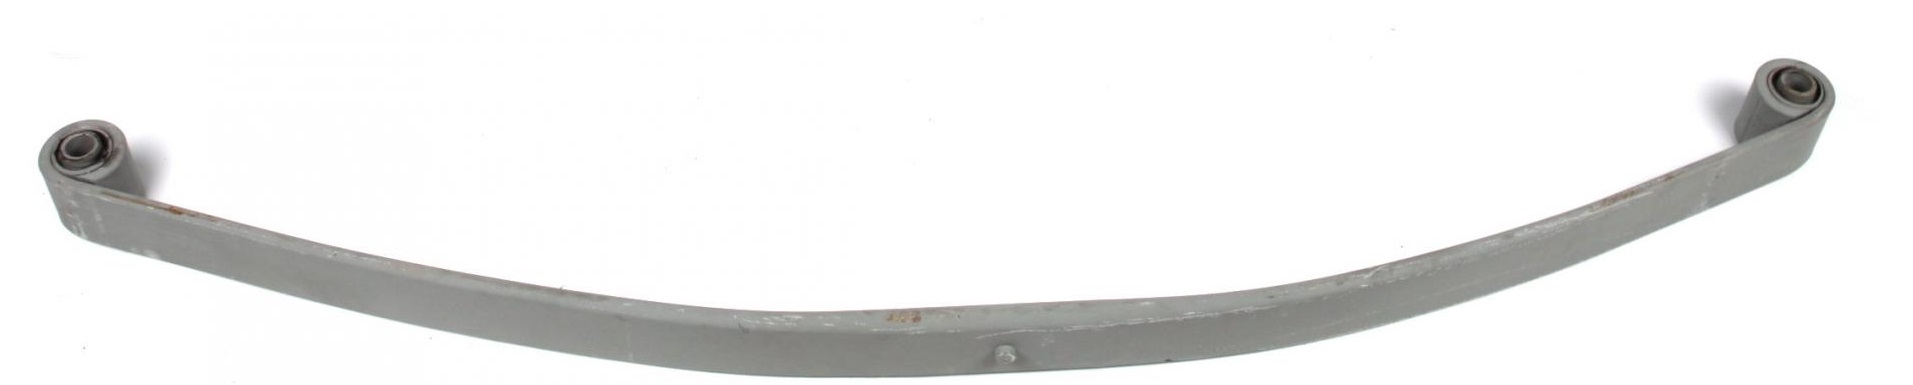 Рессора передняя коренная Daf 400 (60/615/640) 20mm.